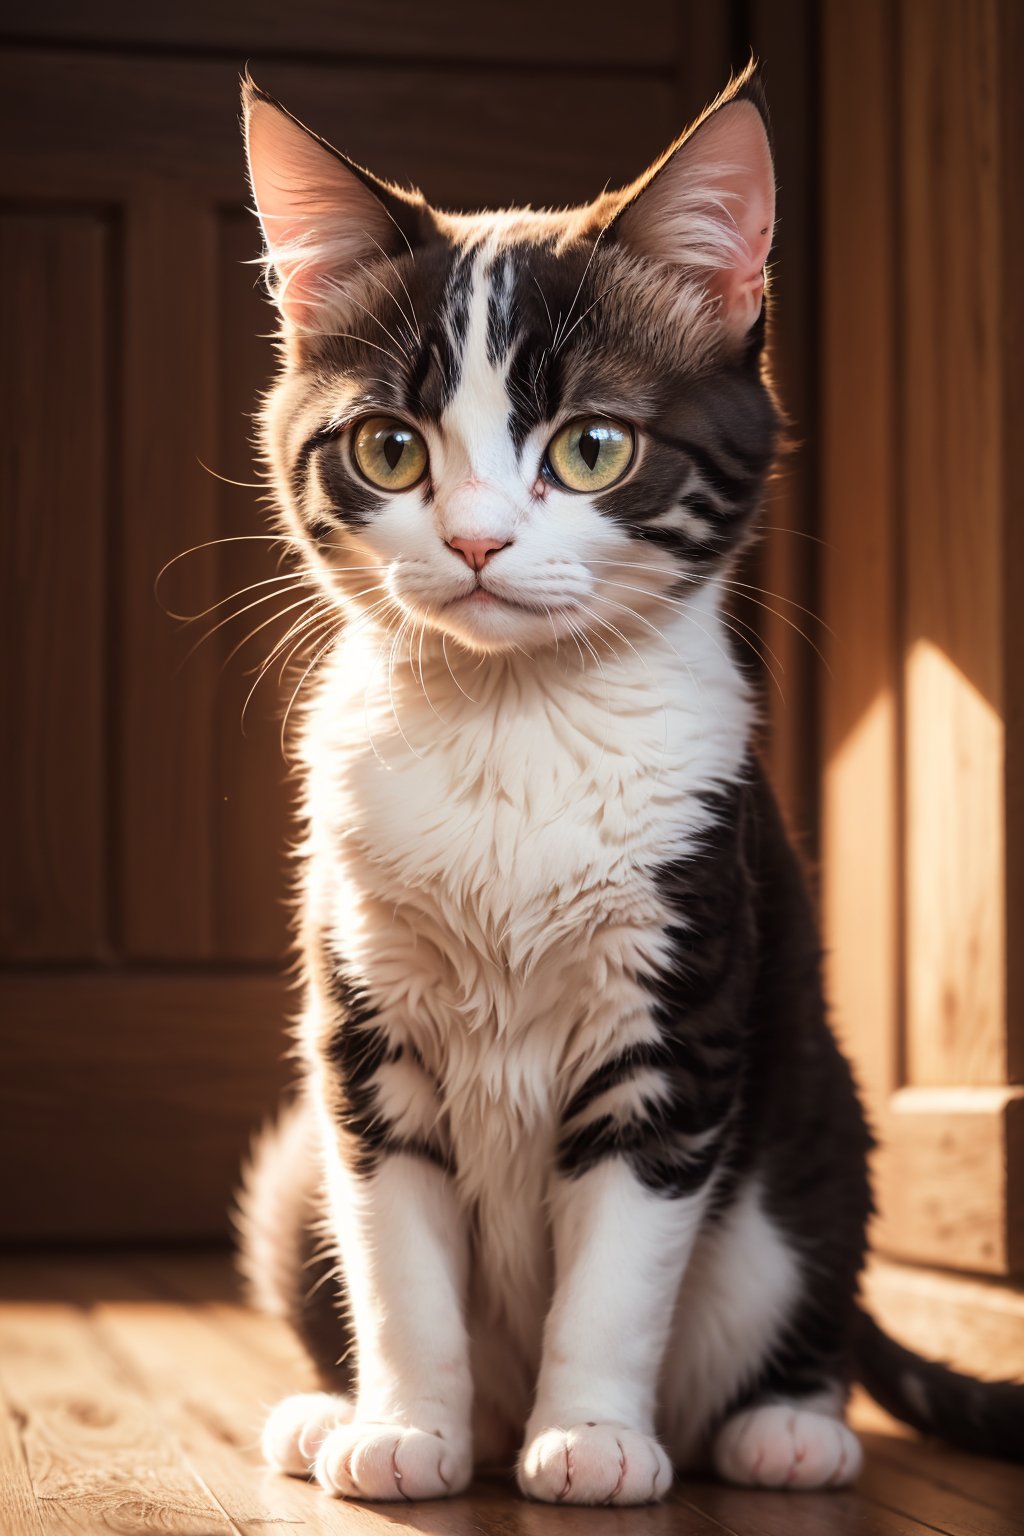 a cute cat portrait, (best quality, highres), detailed fur, vibrant colors, adorable expression, (adorable:1.1), clear focus, soft lighting